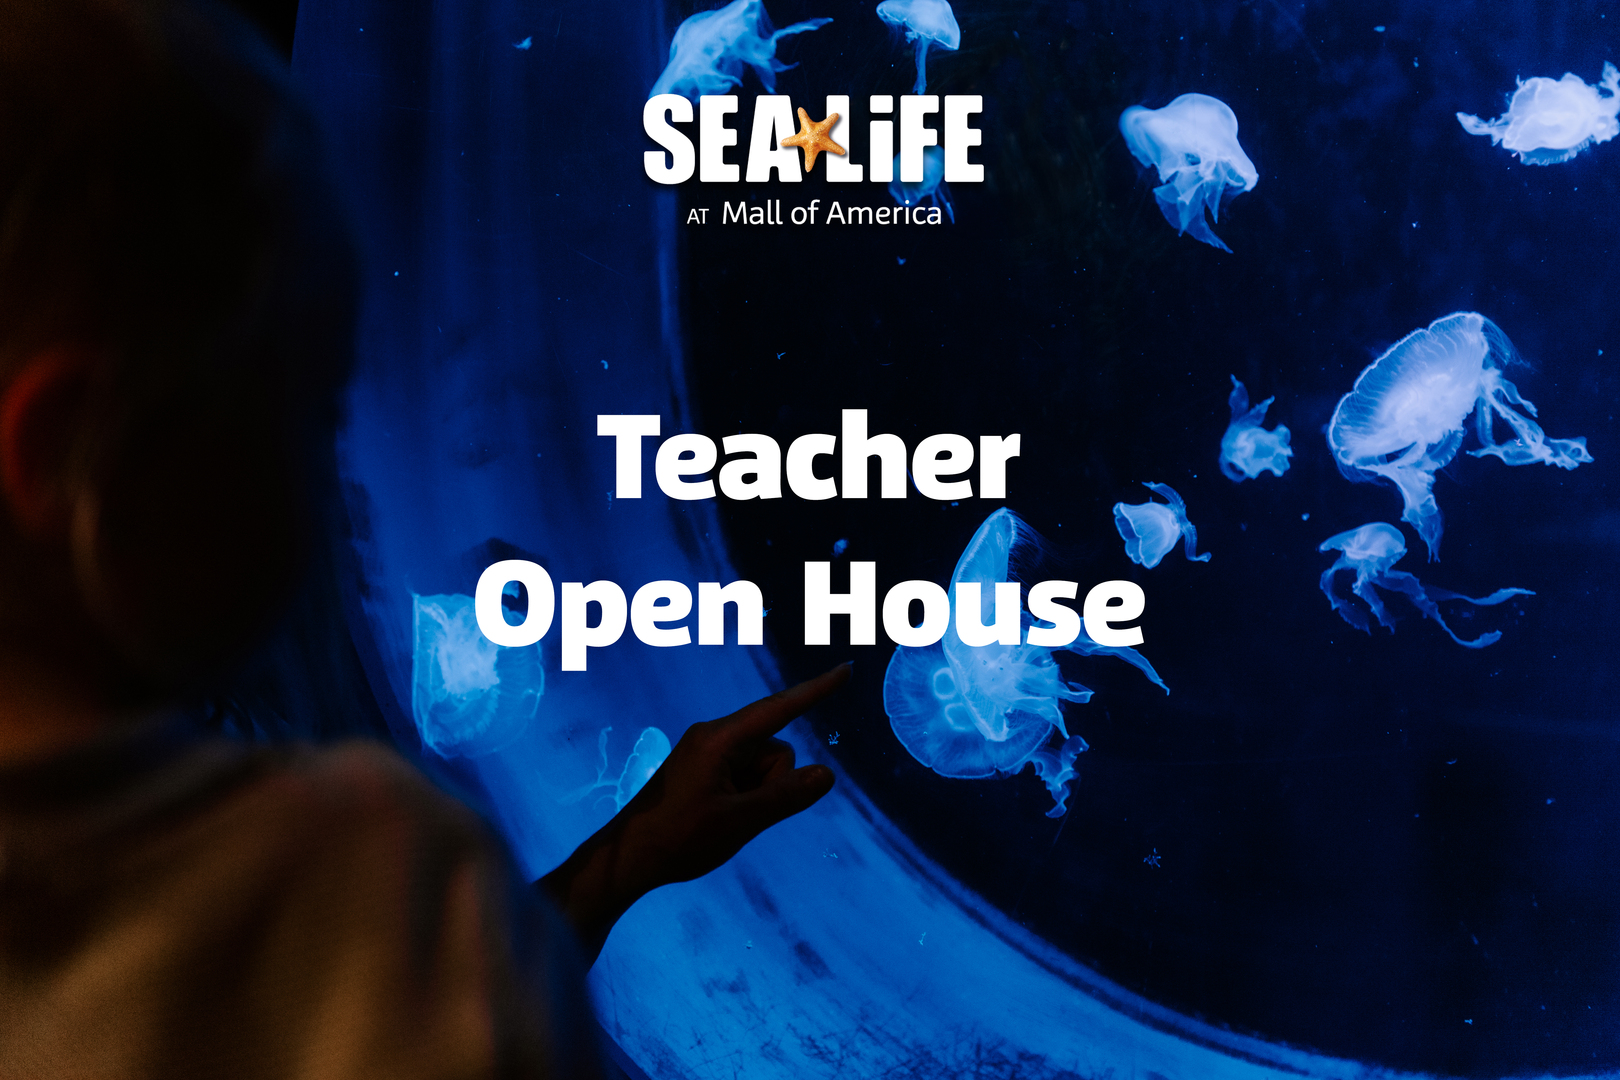 Teacher Open House at SEA LIFE at Mall of America, Bloomington, Minnesota, United States